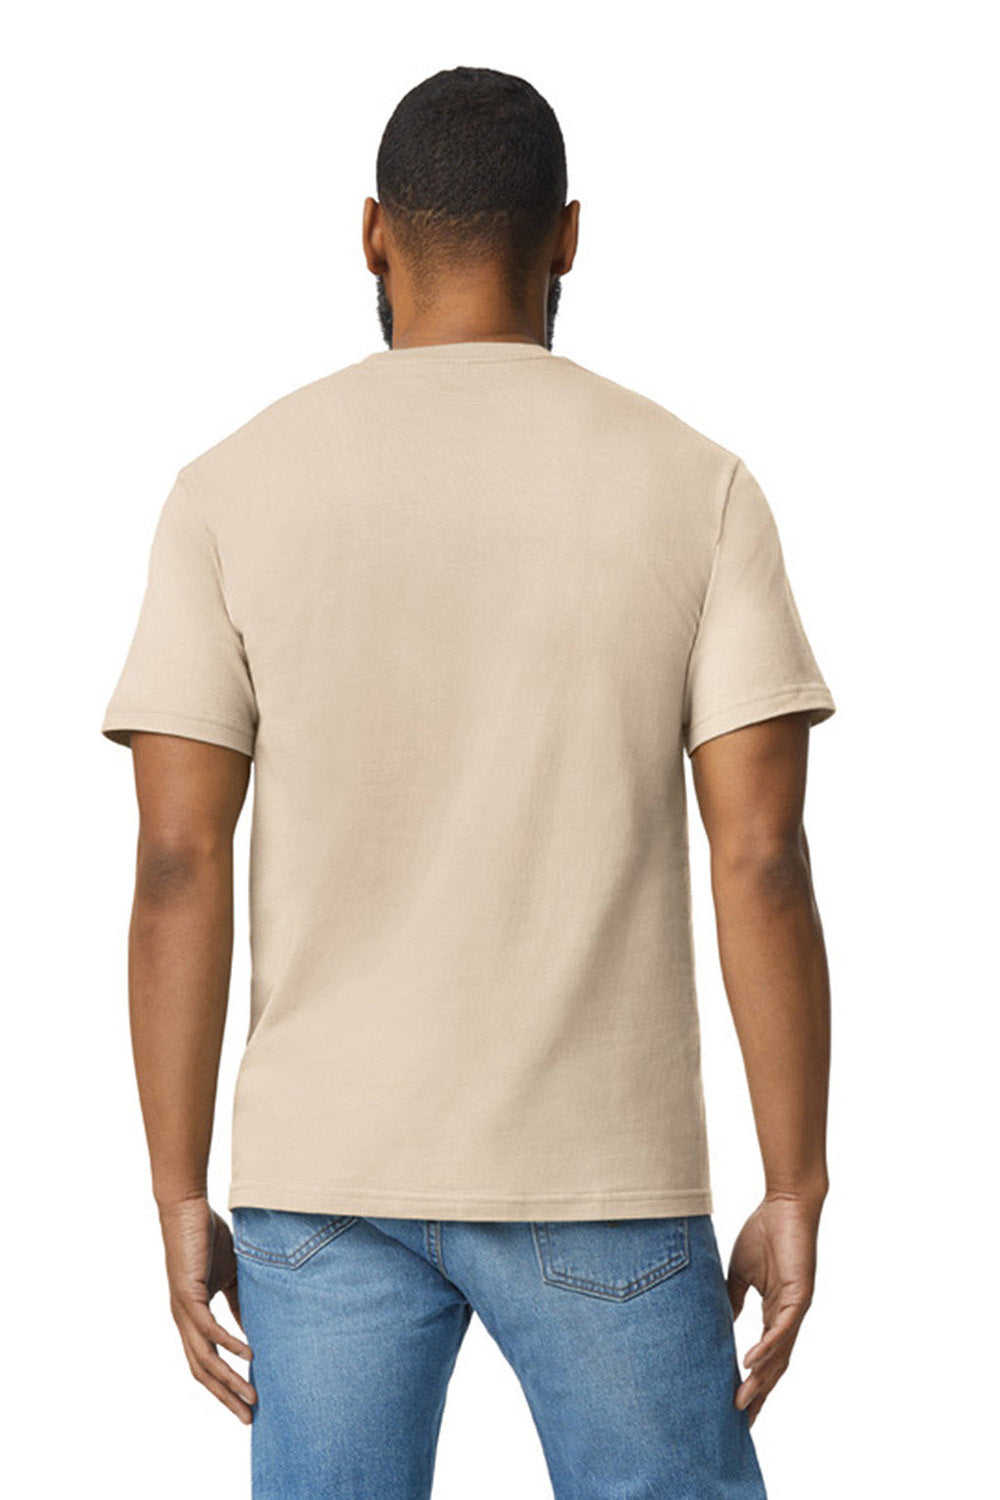 Gildan G650 Mens Softstyle Short Sleeve Crewneck T-Shirt Sand Back